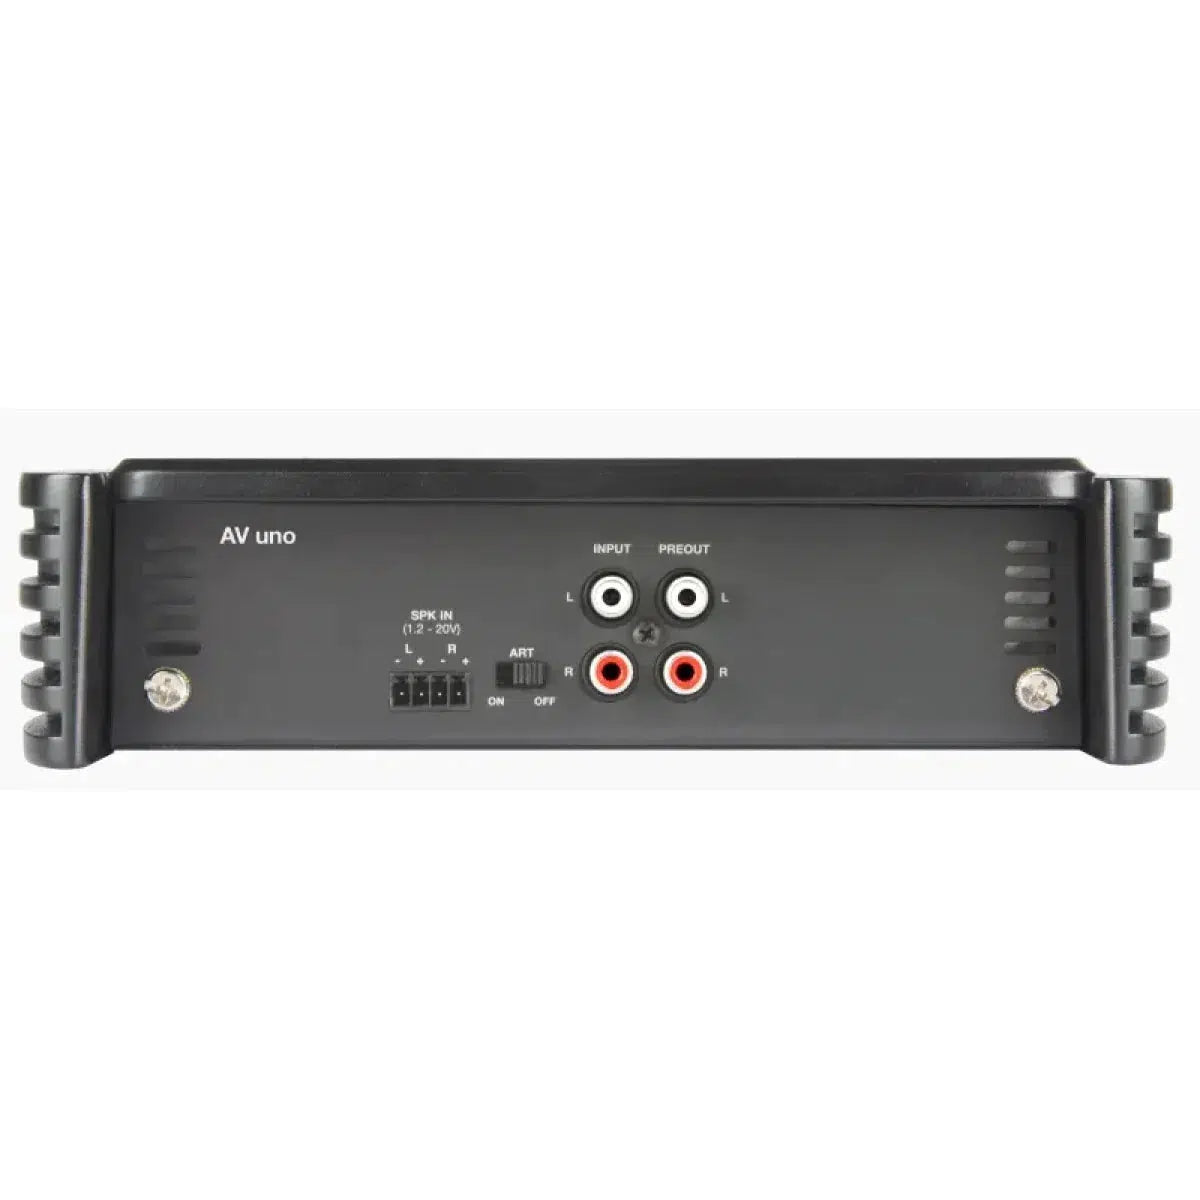 Audison-Voce AV uno-1-channel amplifier-Masori.de